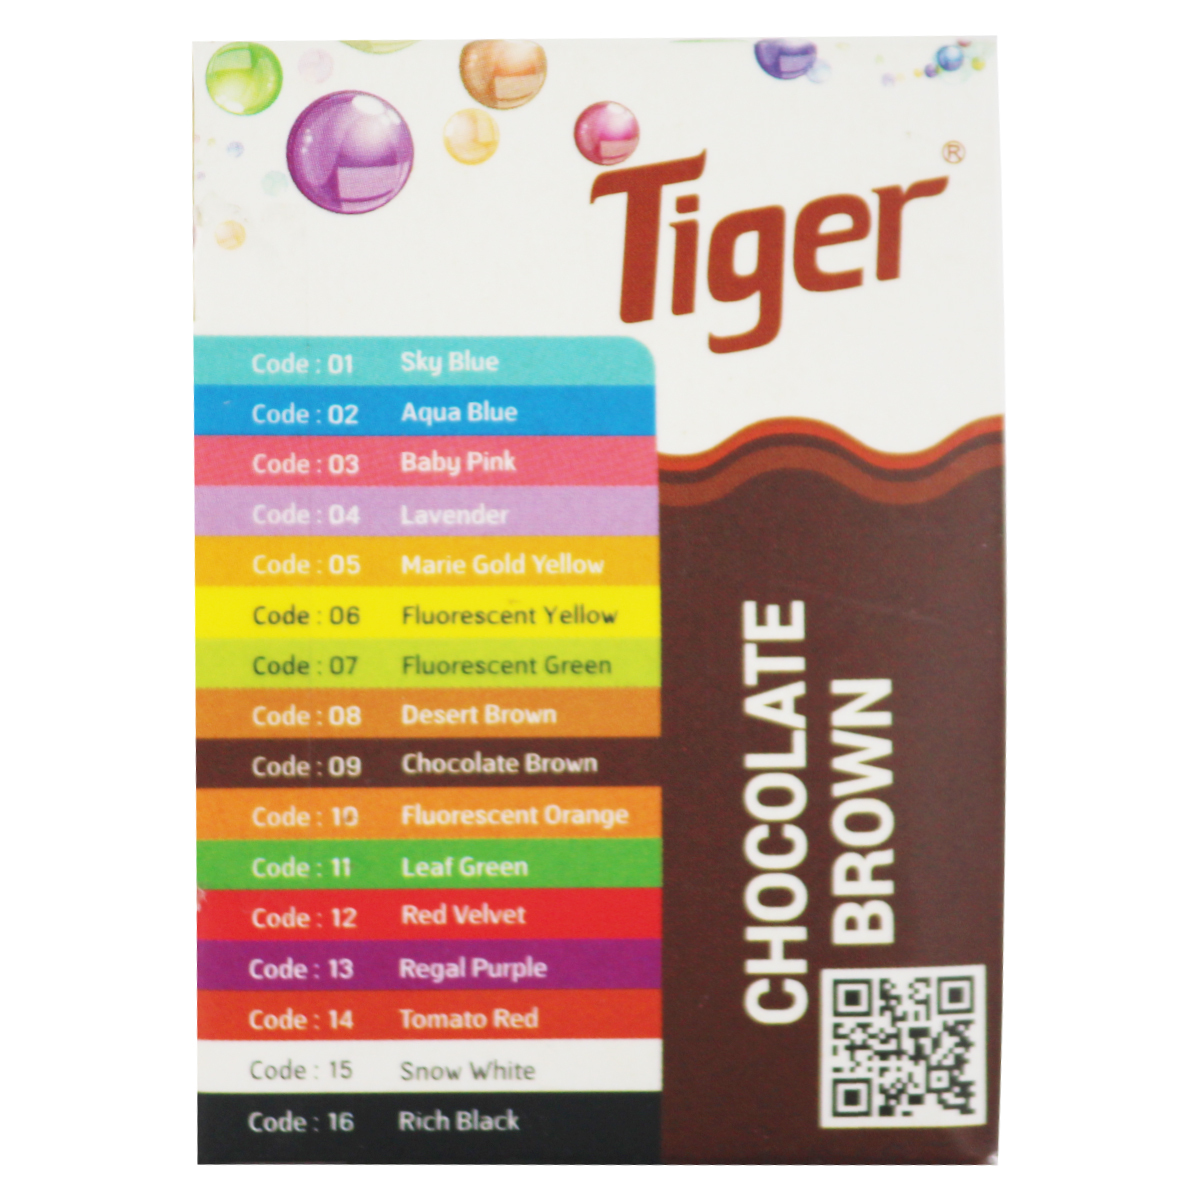 Tiger Gel Color Chocolate Brown 15ml